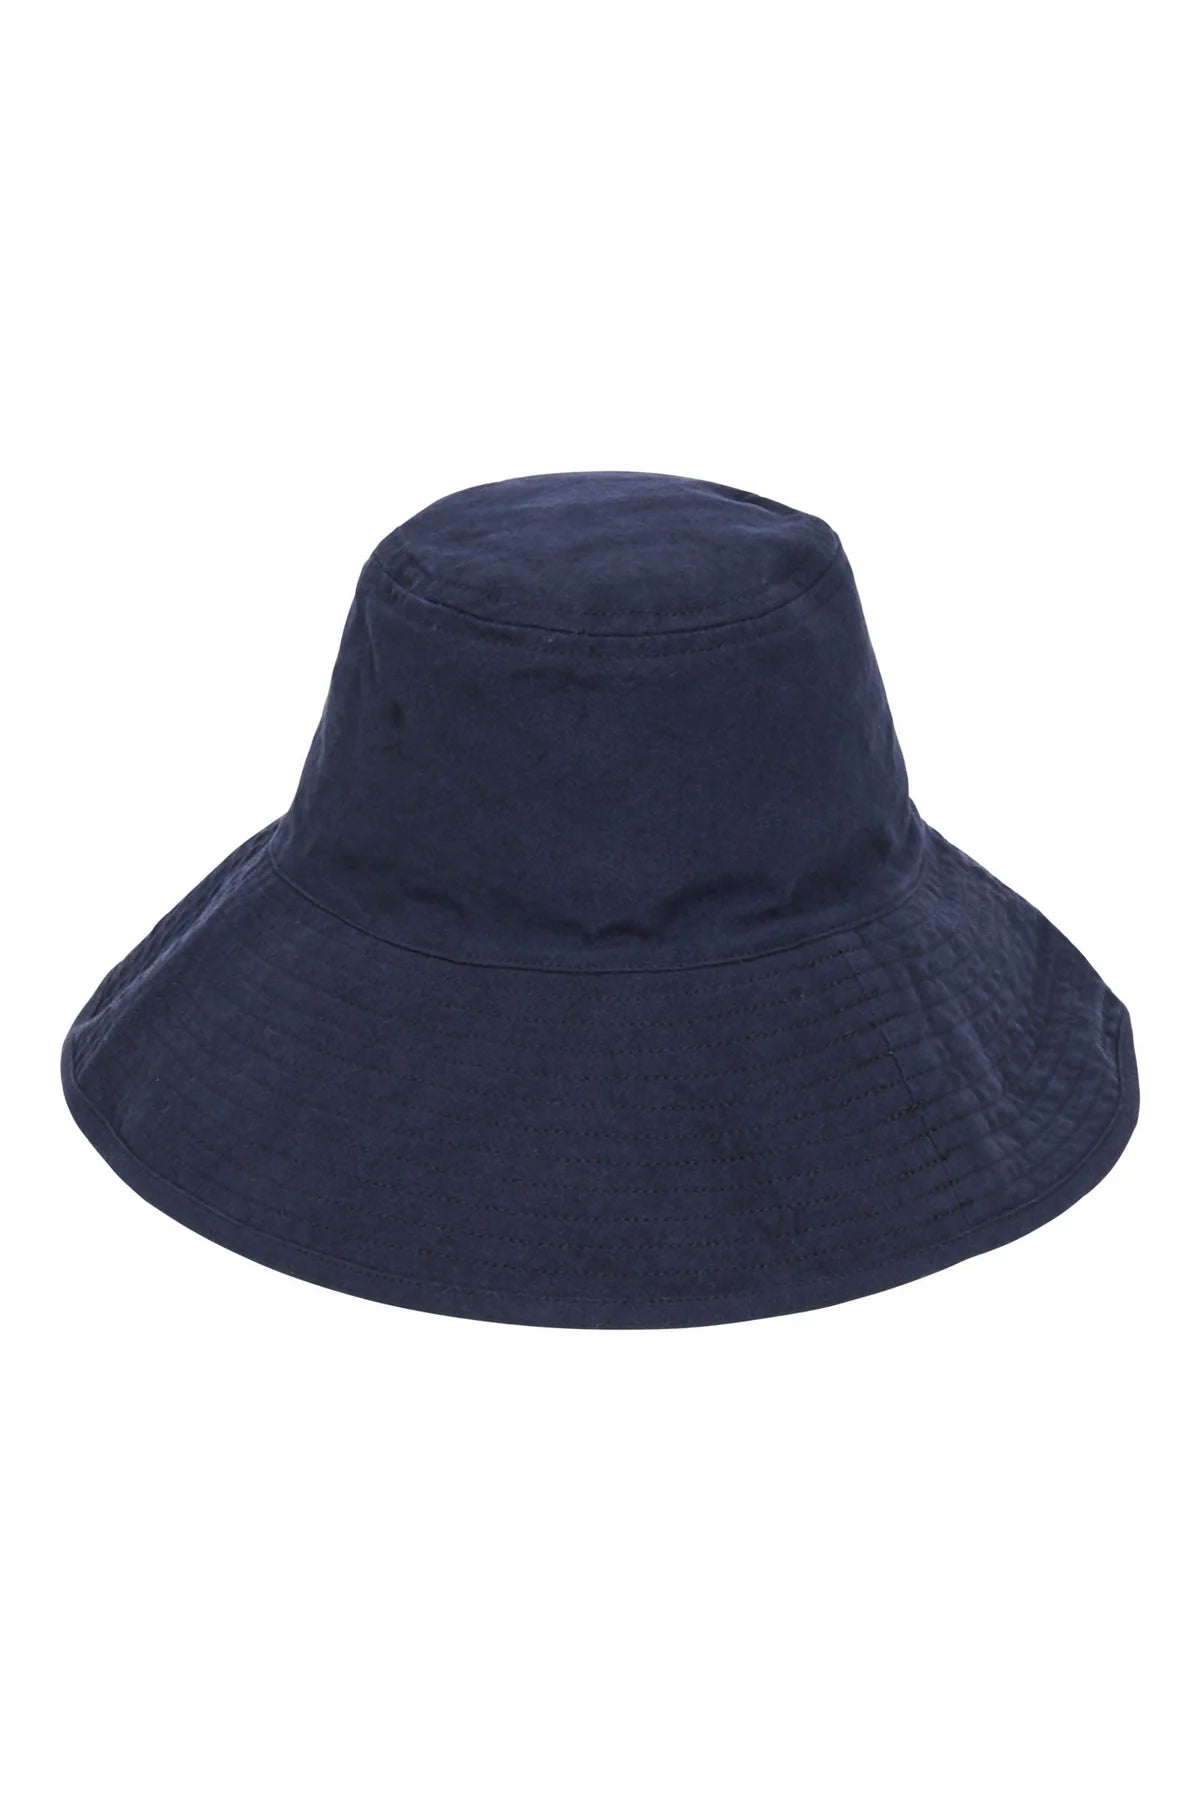 La Vie Hat